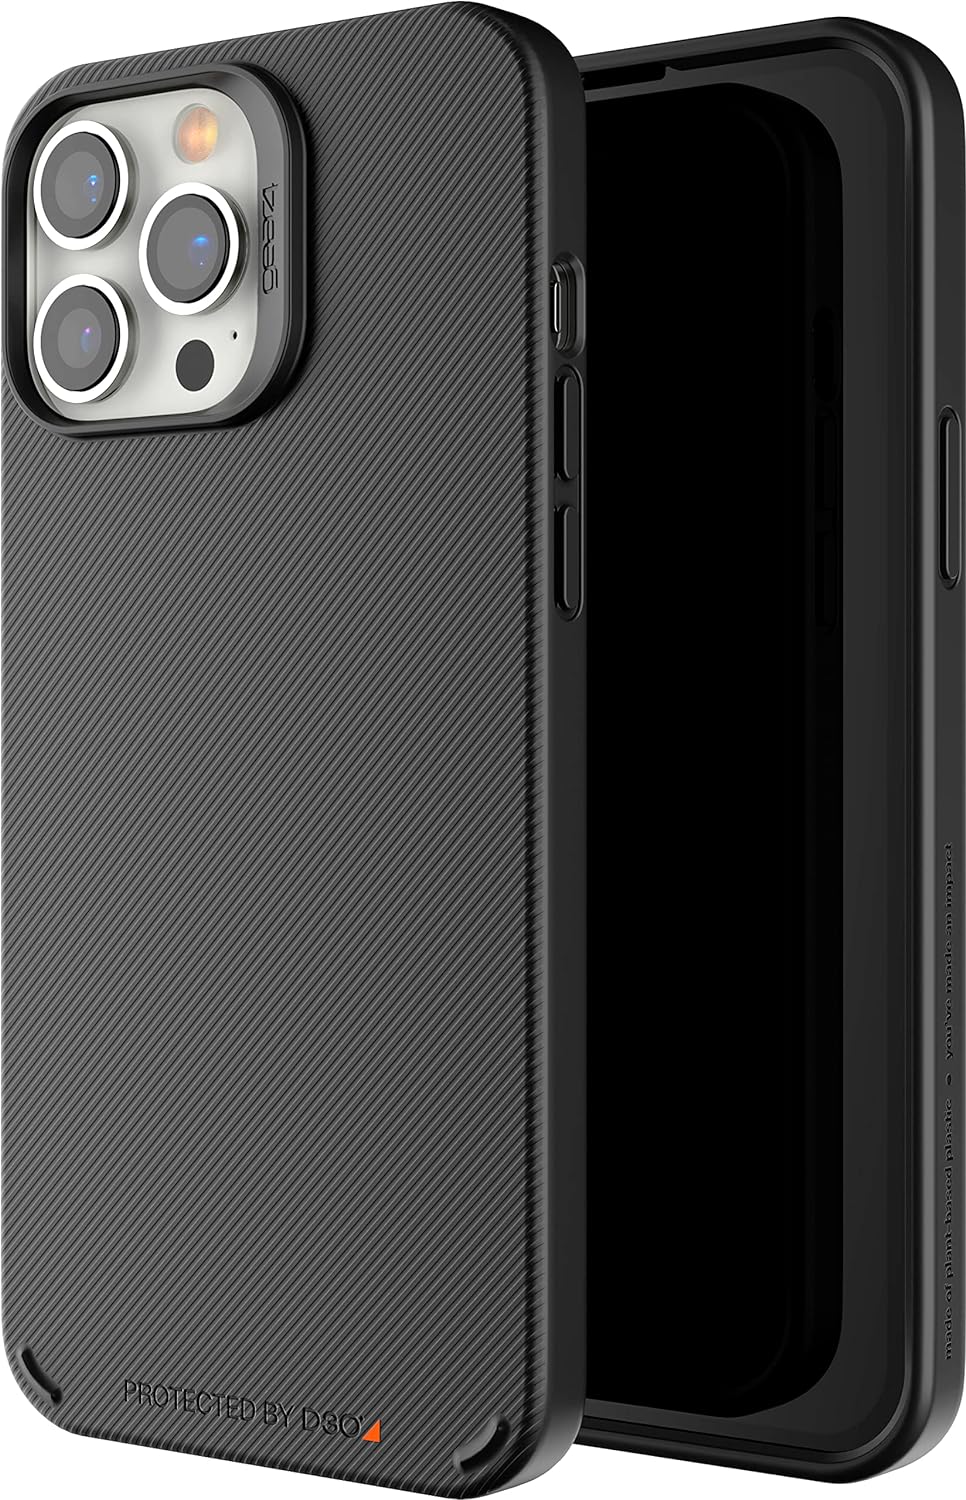 Gear4 Copenhagen Case for Apple iPhone 13 Pro Max, Military Grade Drop Protection - Black